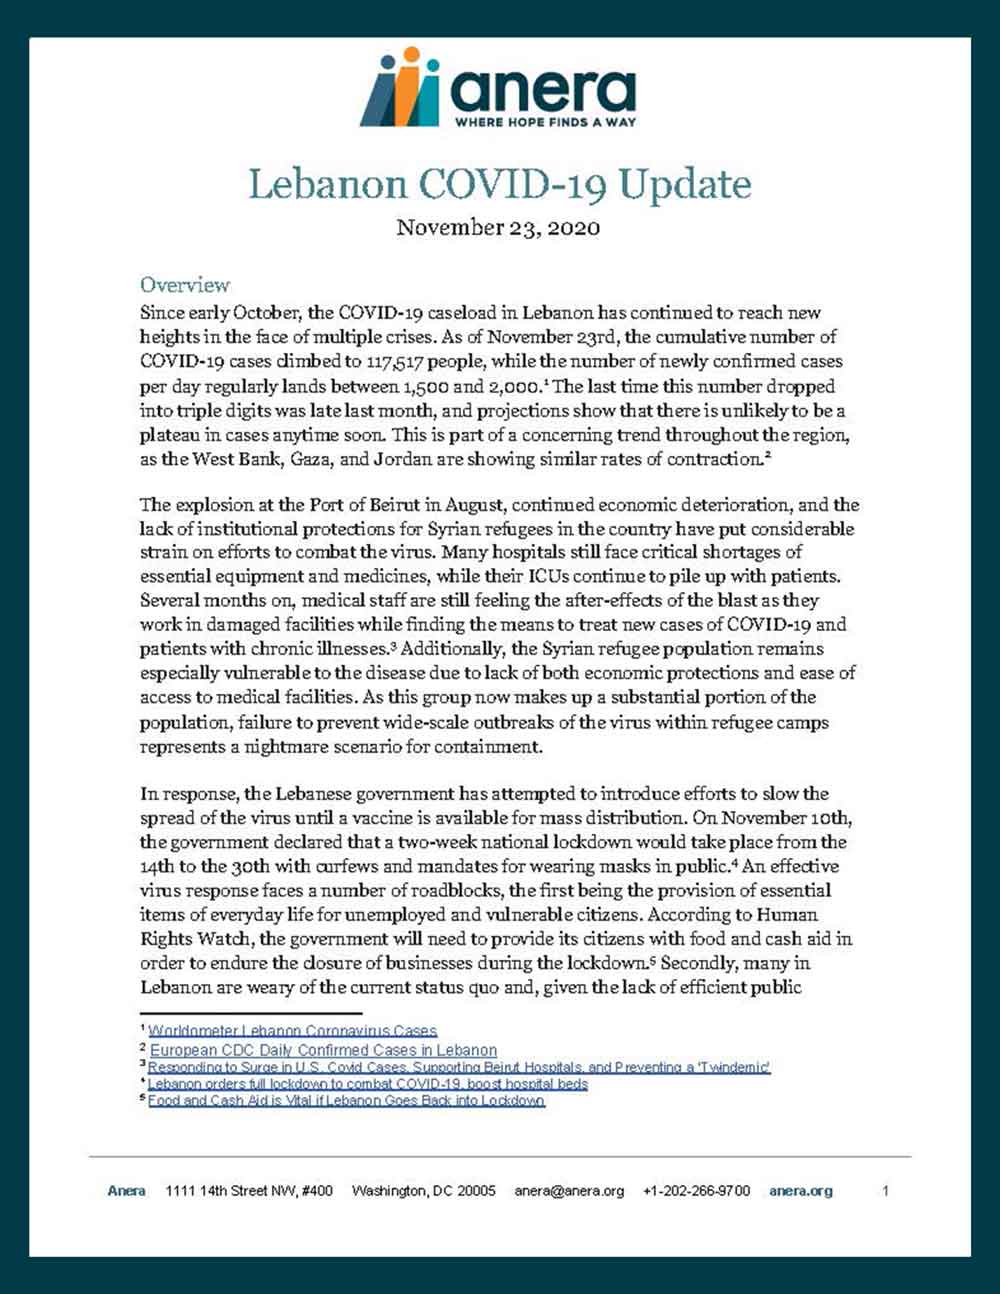 Anera's COVID November situation report for Lebanon